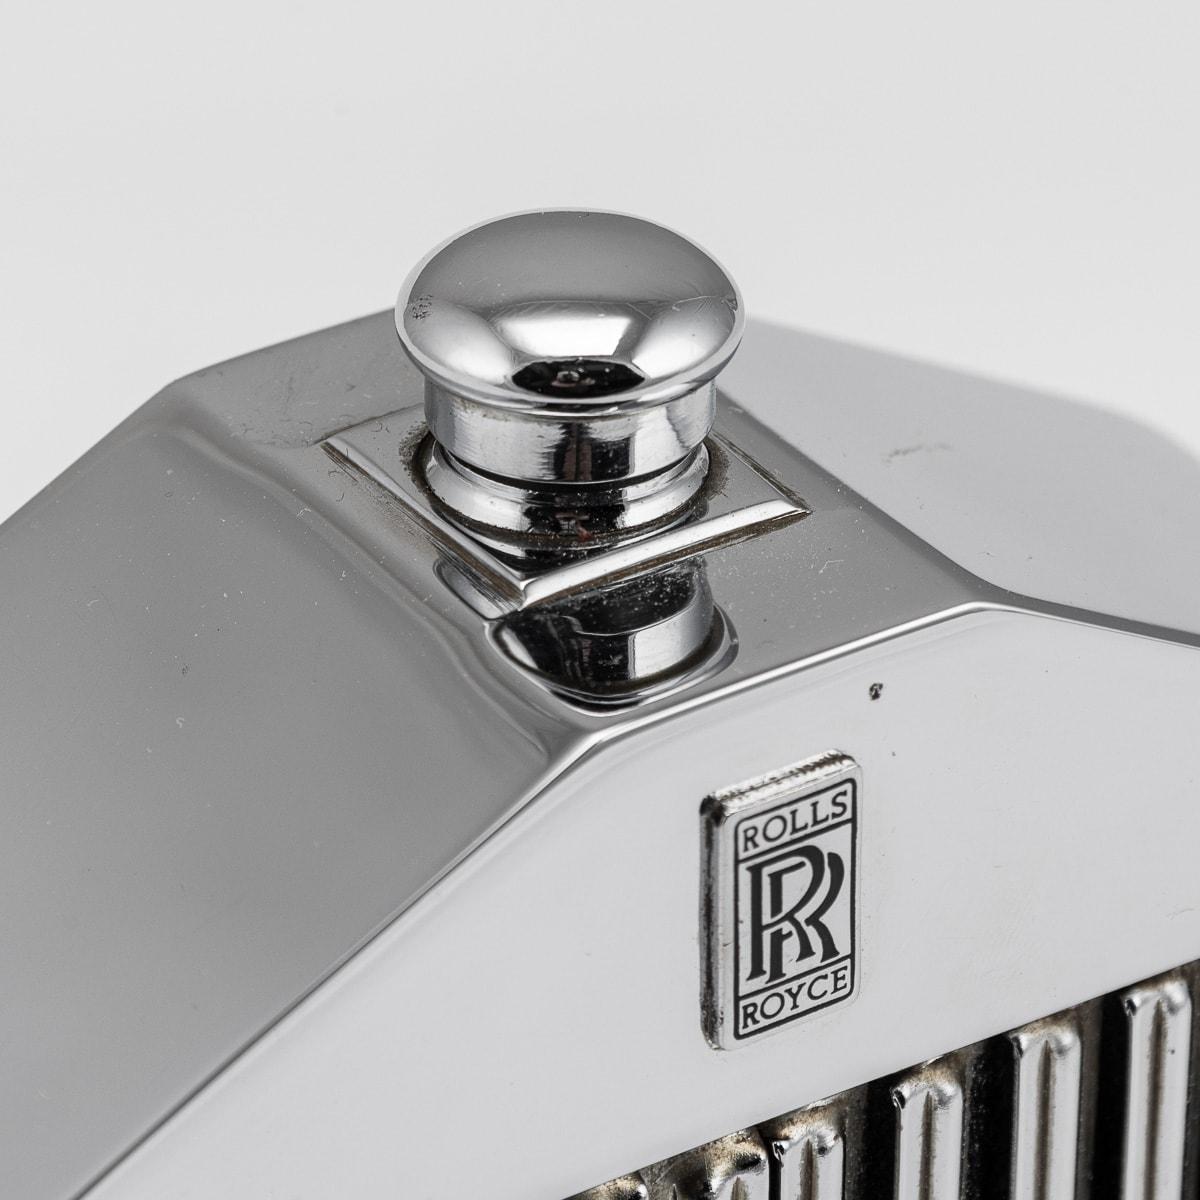 20th Century Stylish Ruddspeed Rolls Royce Radiator Flask / Decanter c.1960 For Sale 1